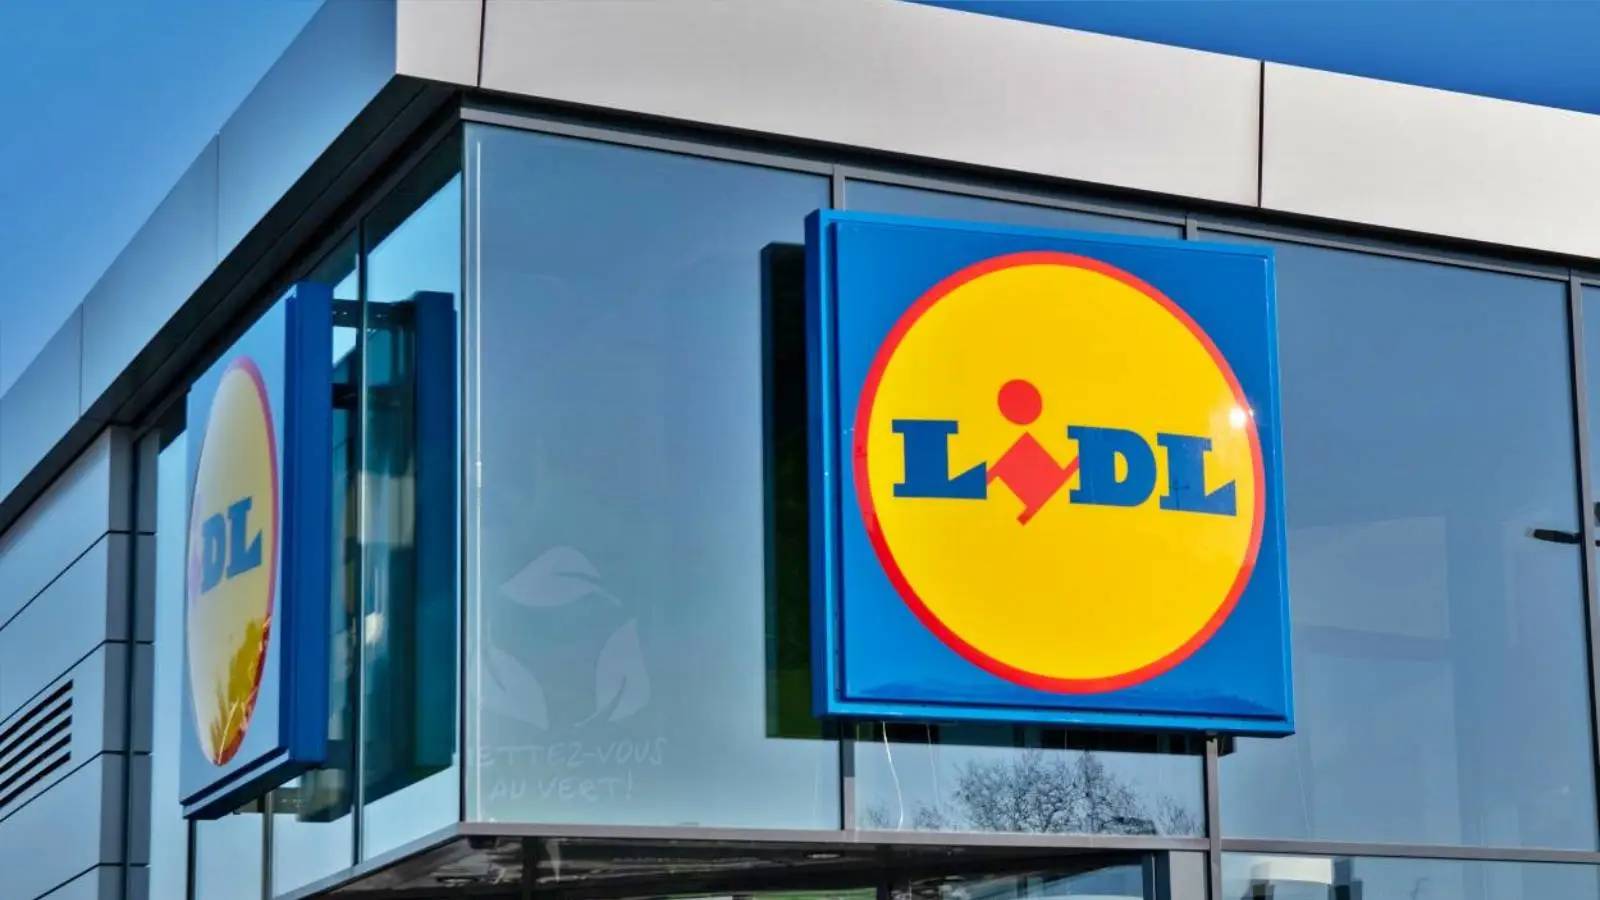 LIDL Romania stores Important changes